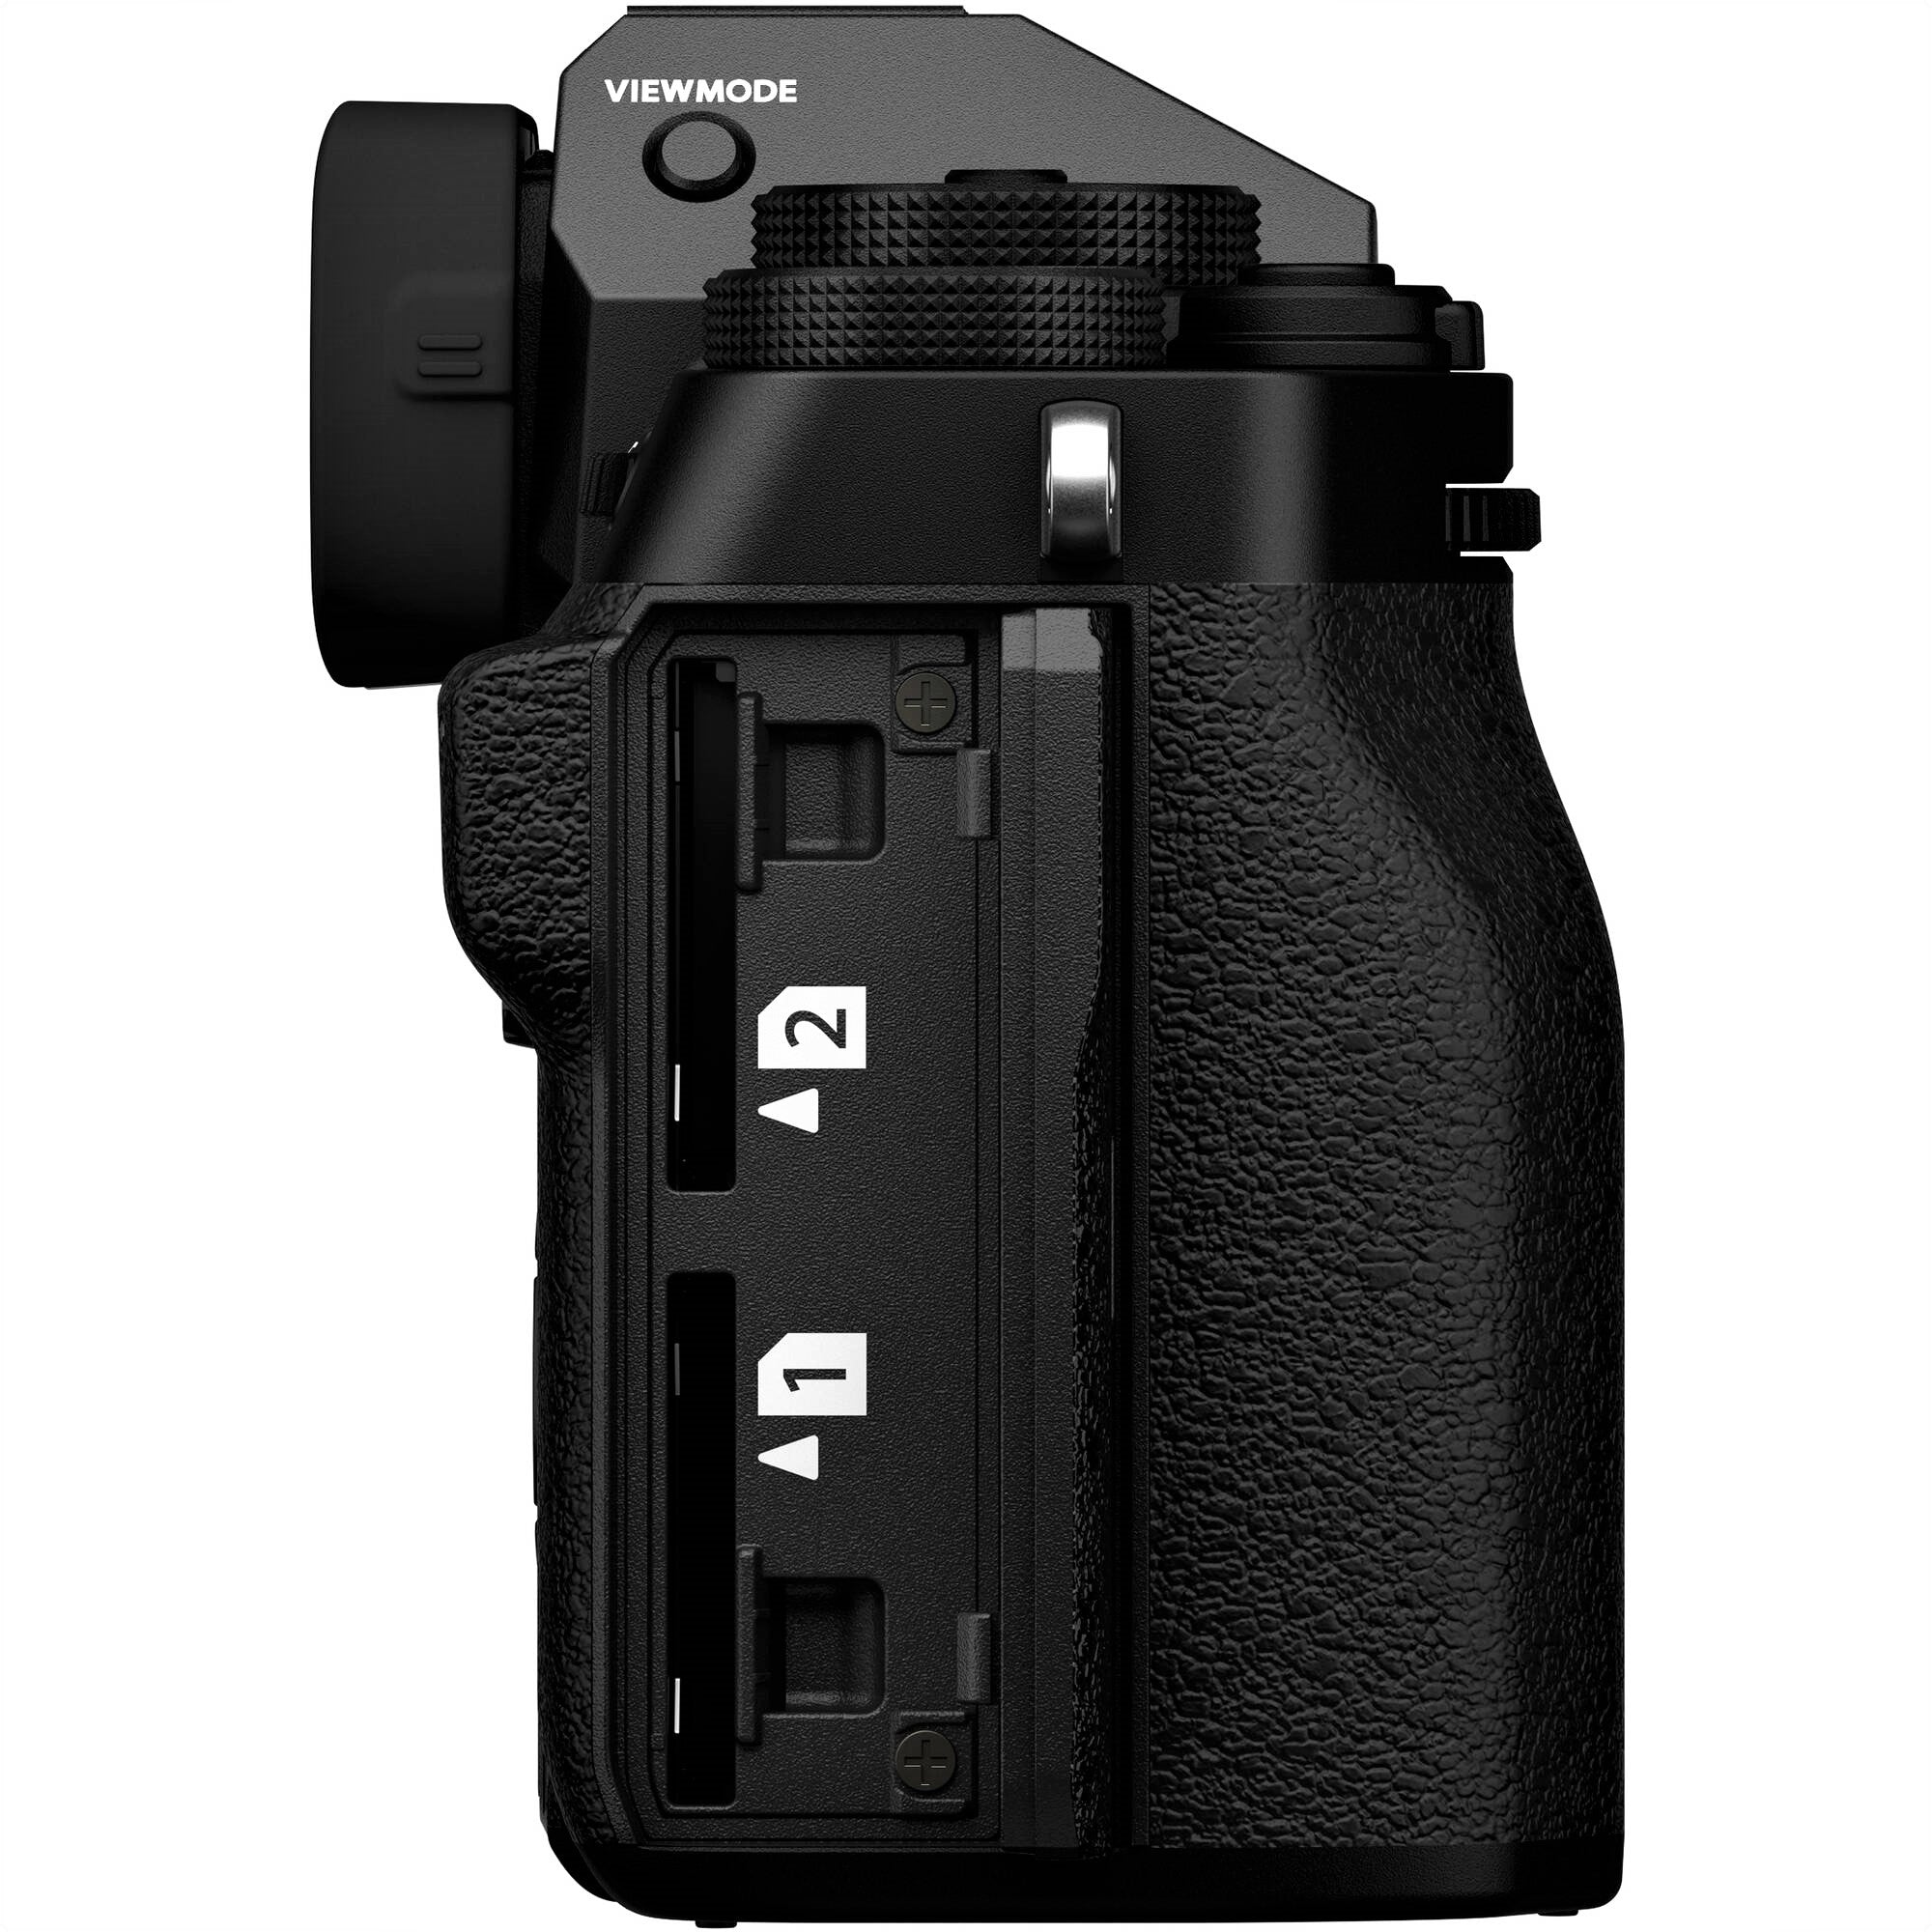 Fujifilm X-T5 Mirrorless Camera with 16-80mm Lens Card slots